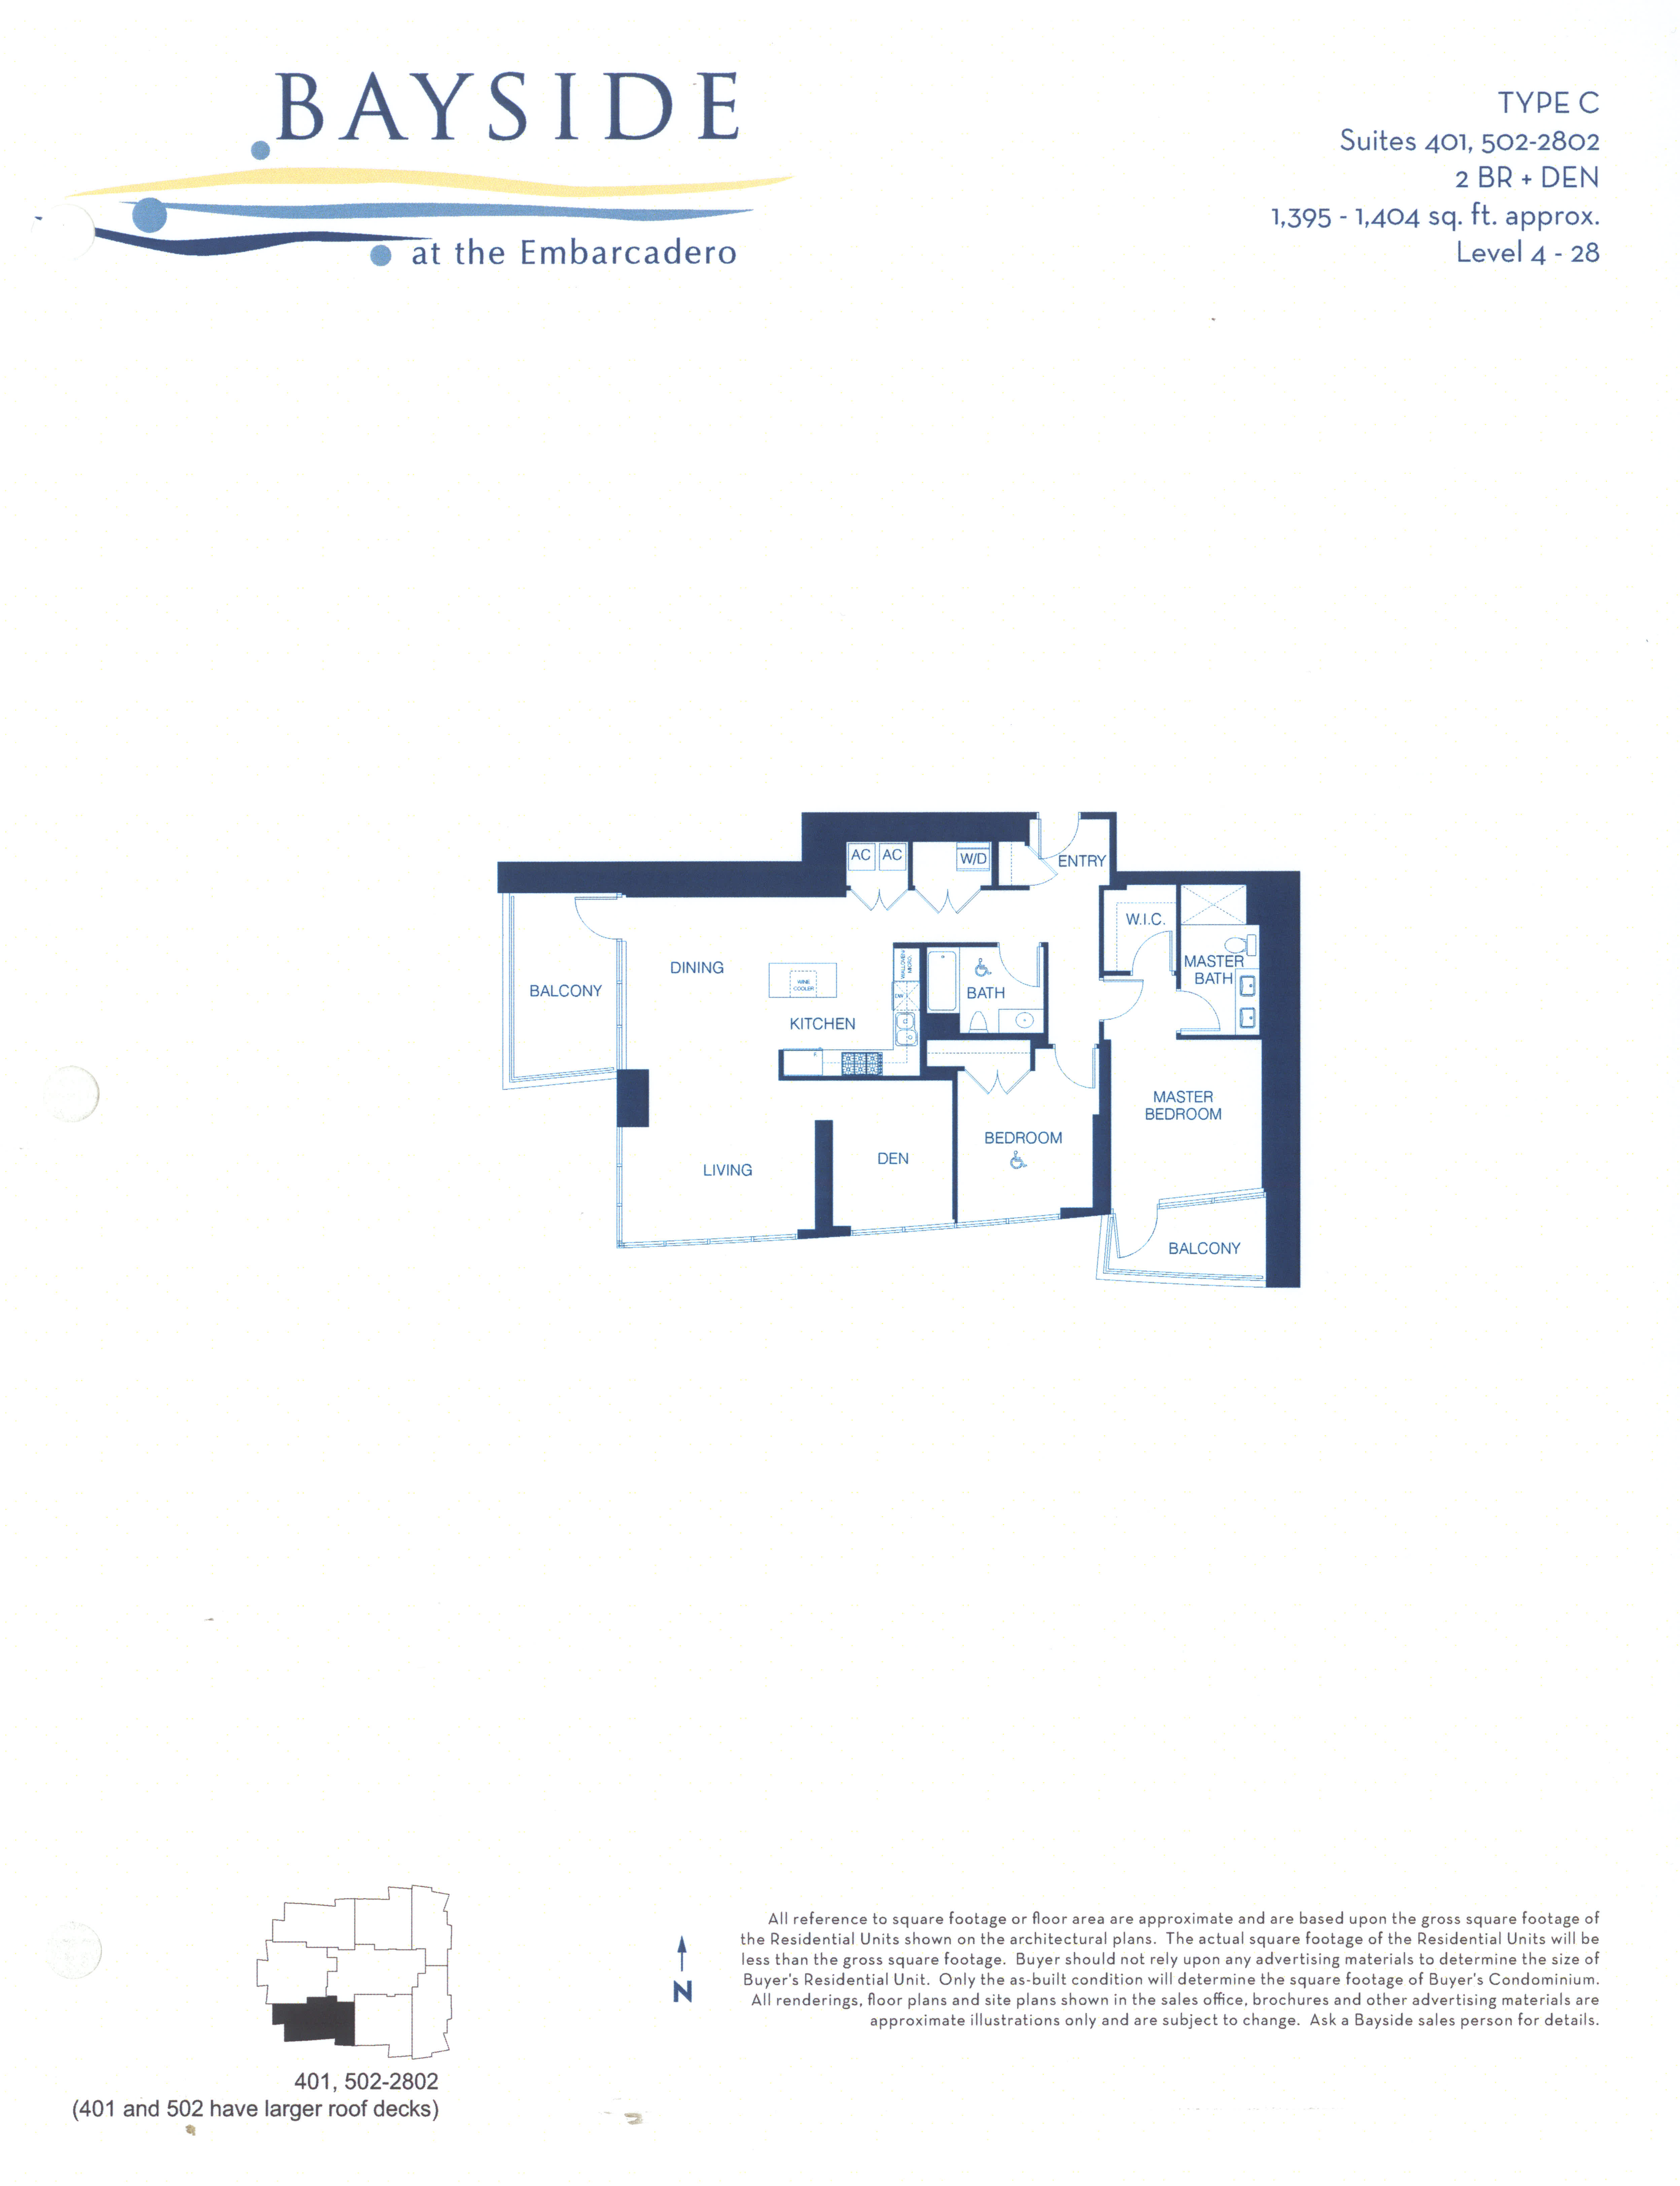 Bayside Floor Plan Level 4- 28 Type C